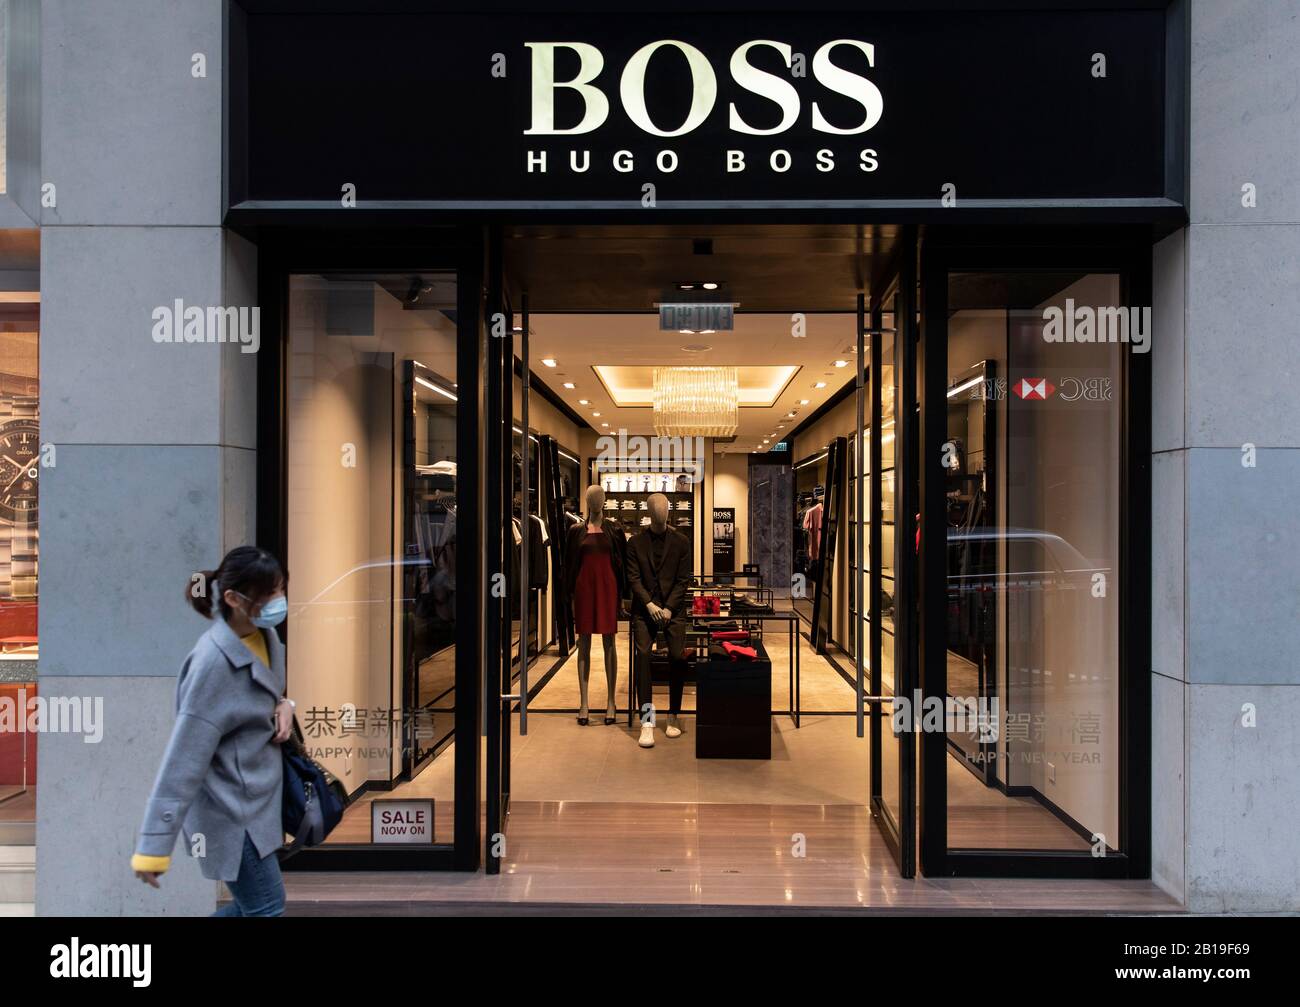 Hugo Boss Brand High Resolution Stock Photography and Images - Alamy